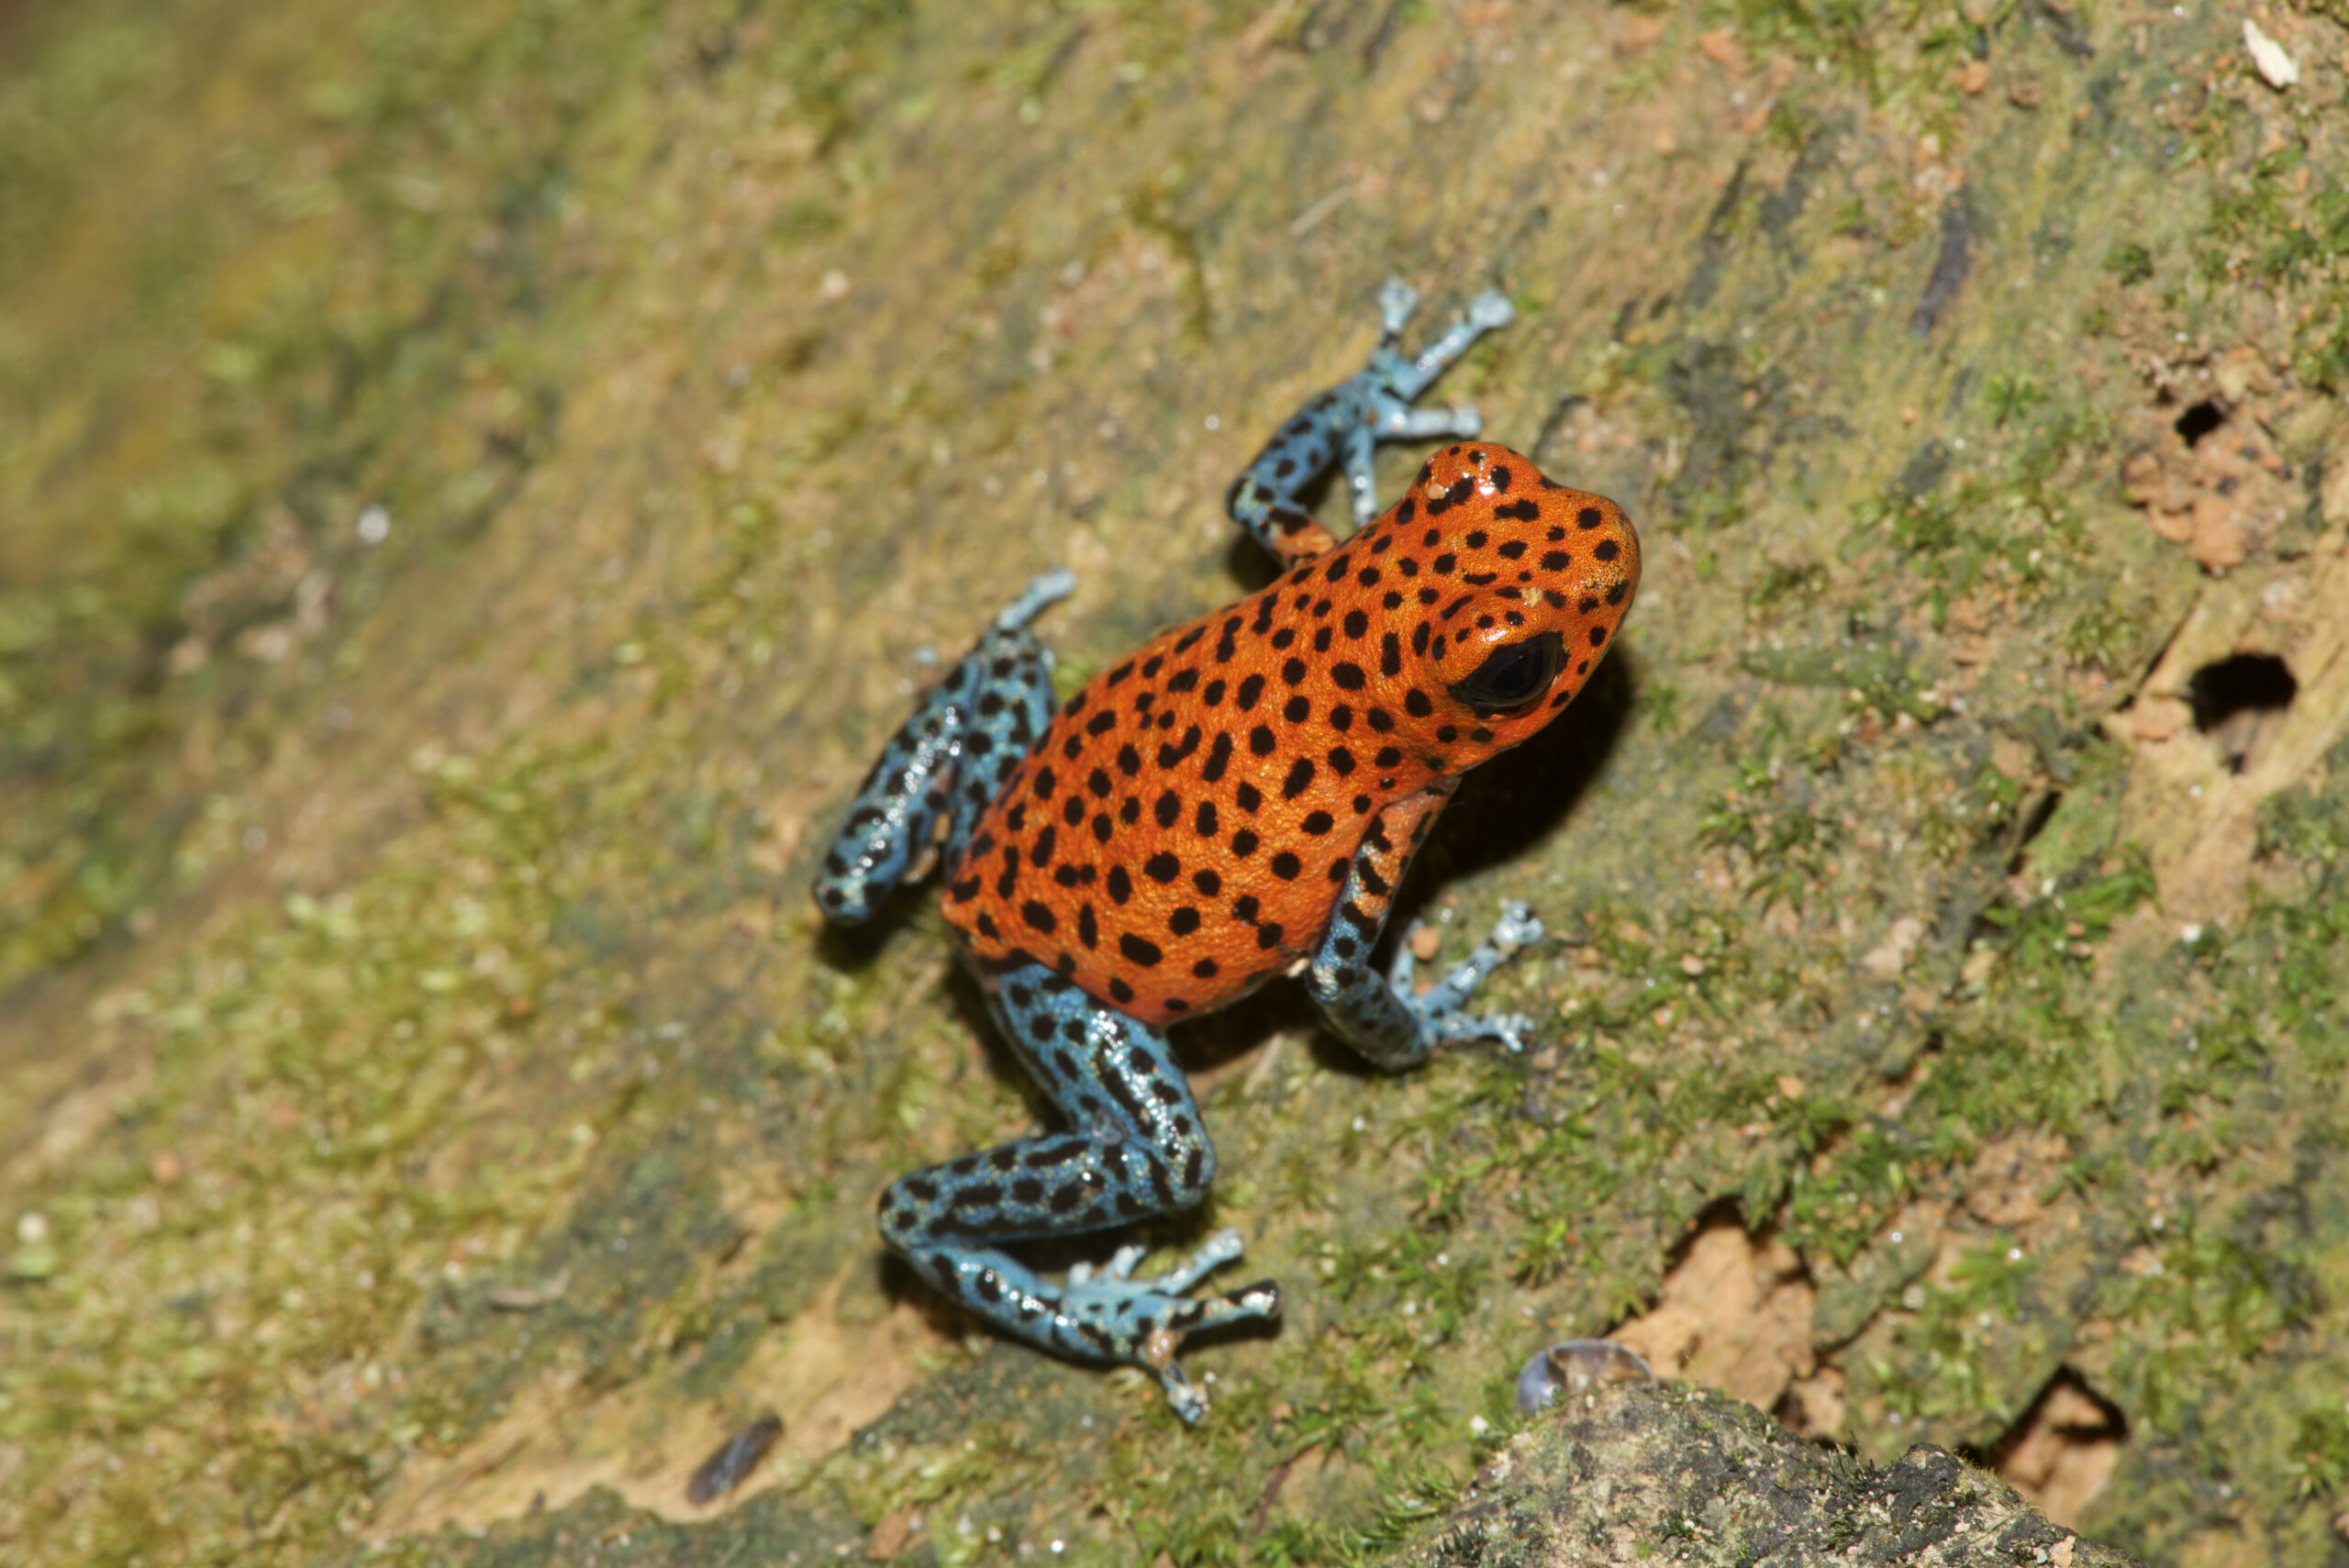 Oophaga pumilio from Isla Cristobal, Bocas del Toro, Panama - by E. Van Heygen.